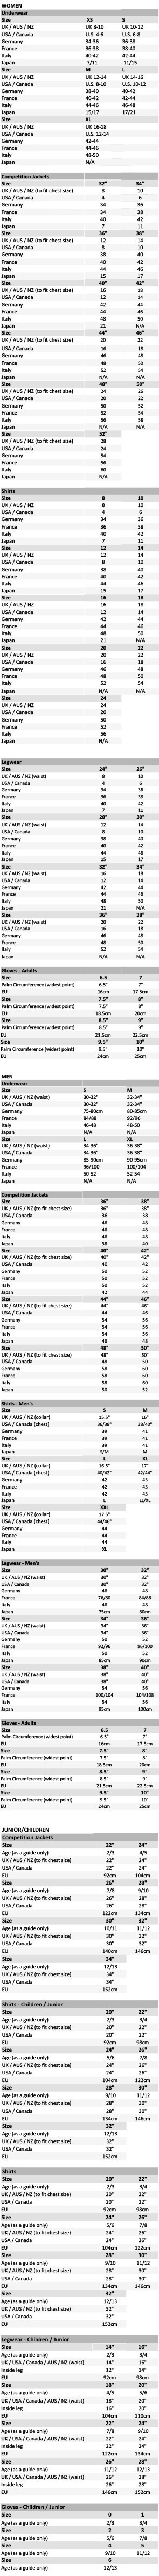 Riding Sport Breeches Size Chart